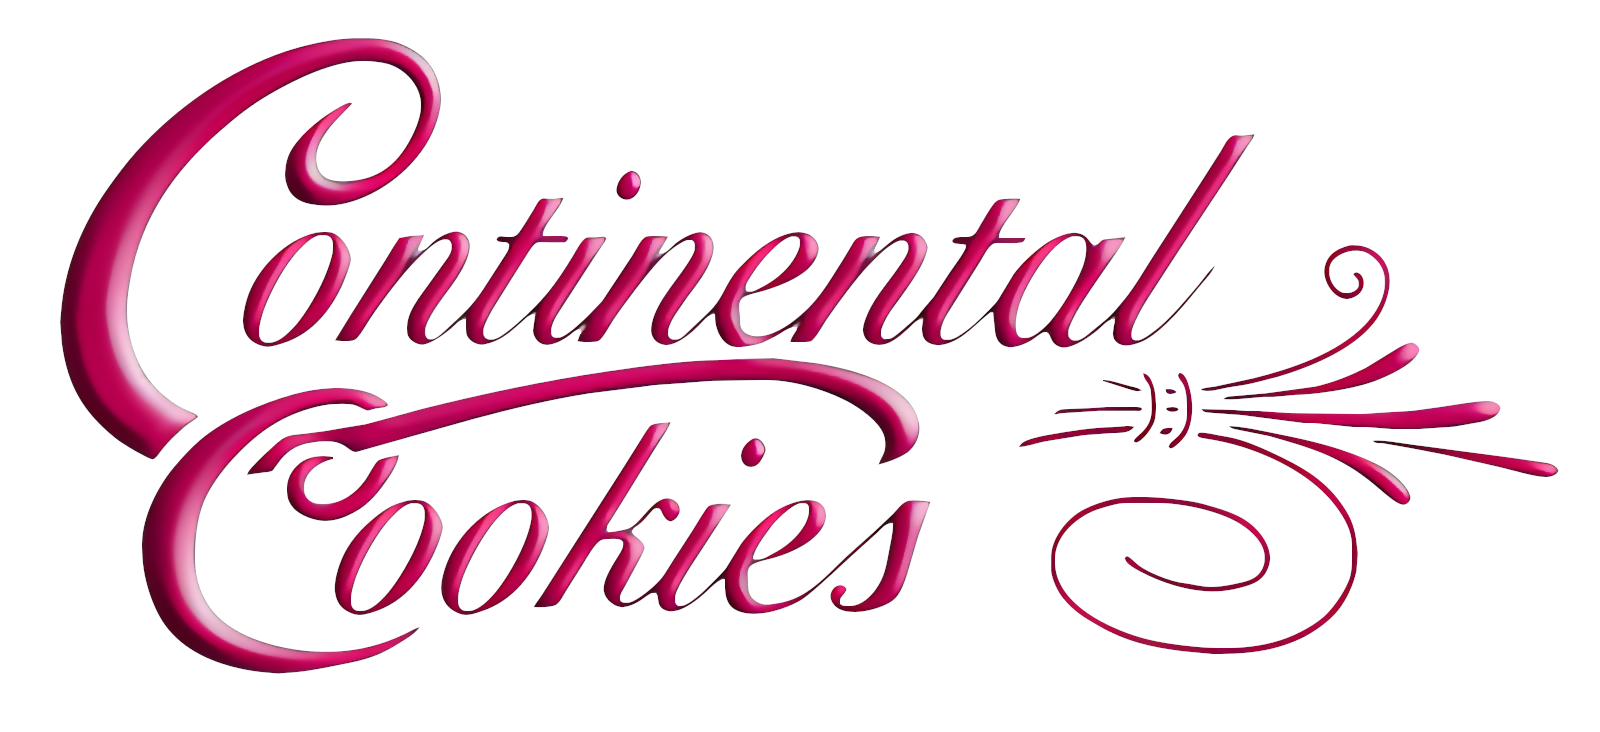 Continental Cookies | Care Plus NJ